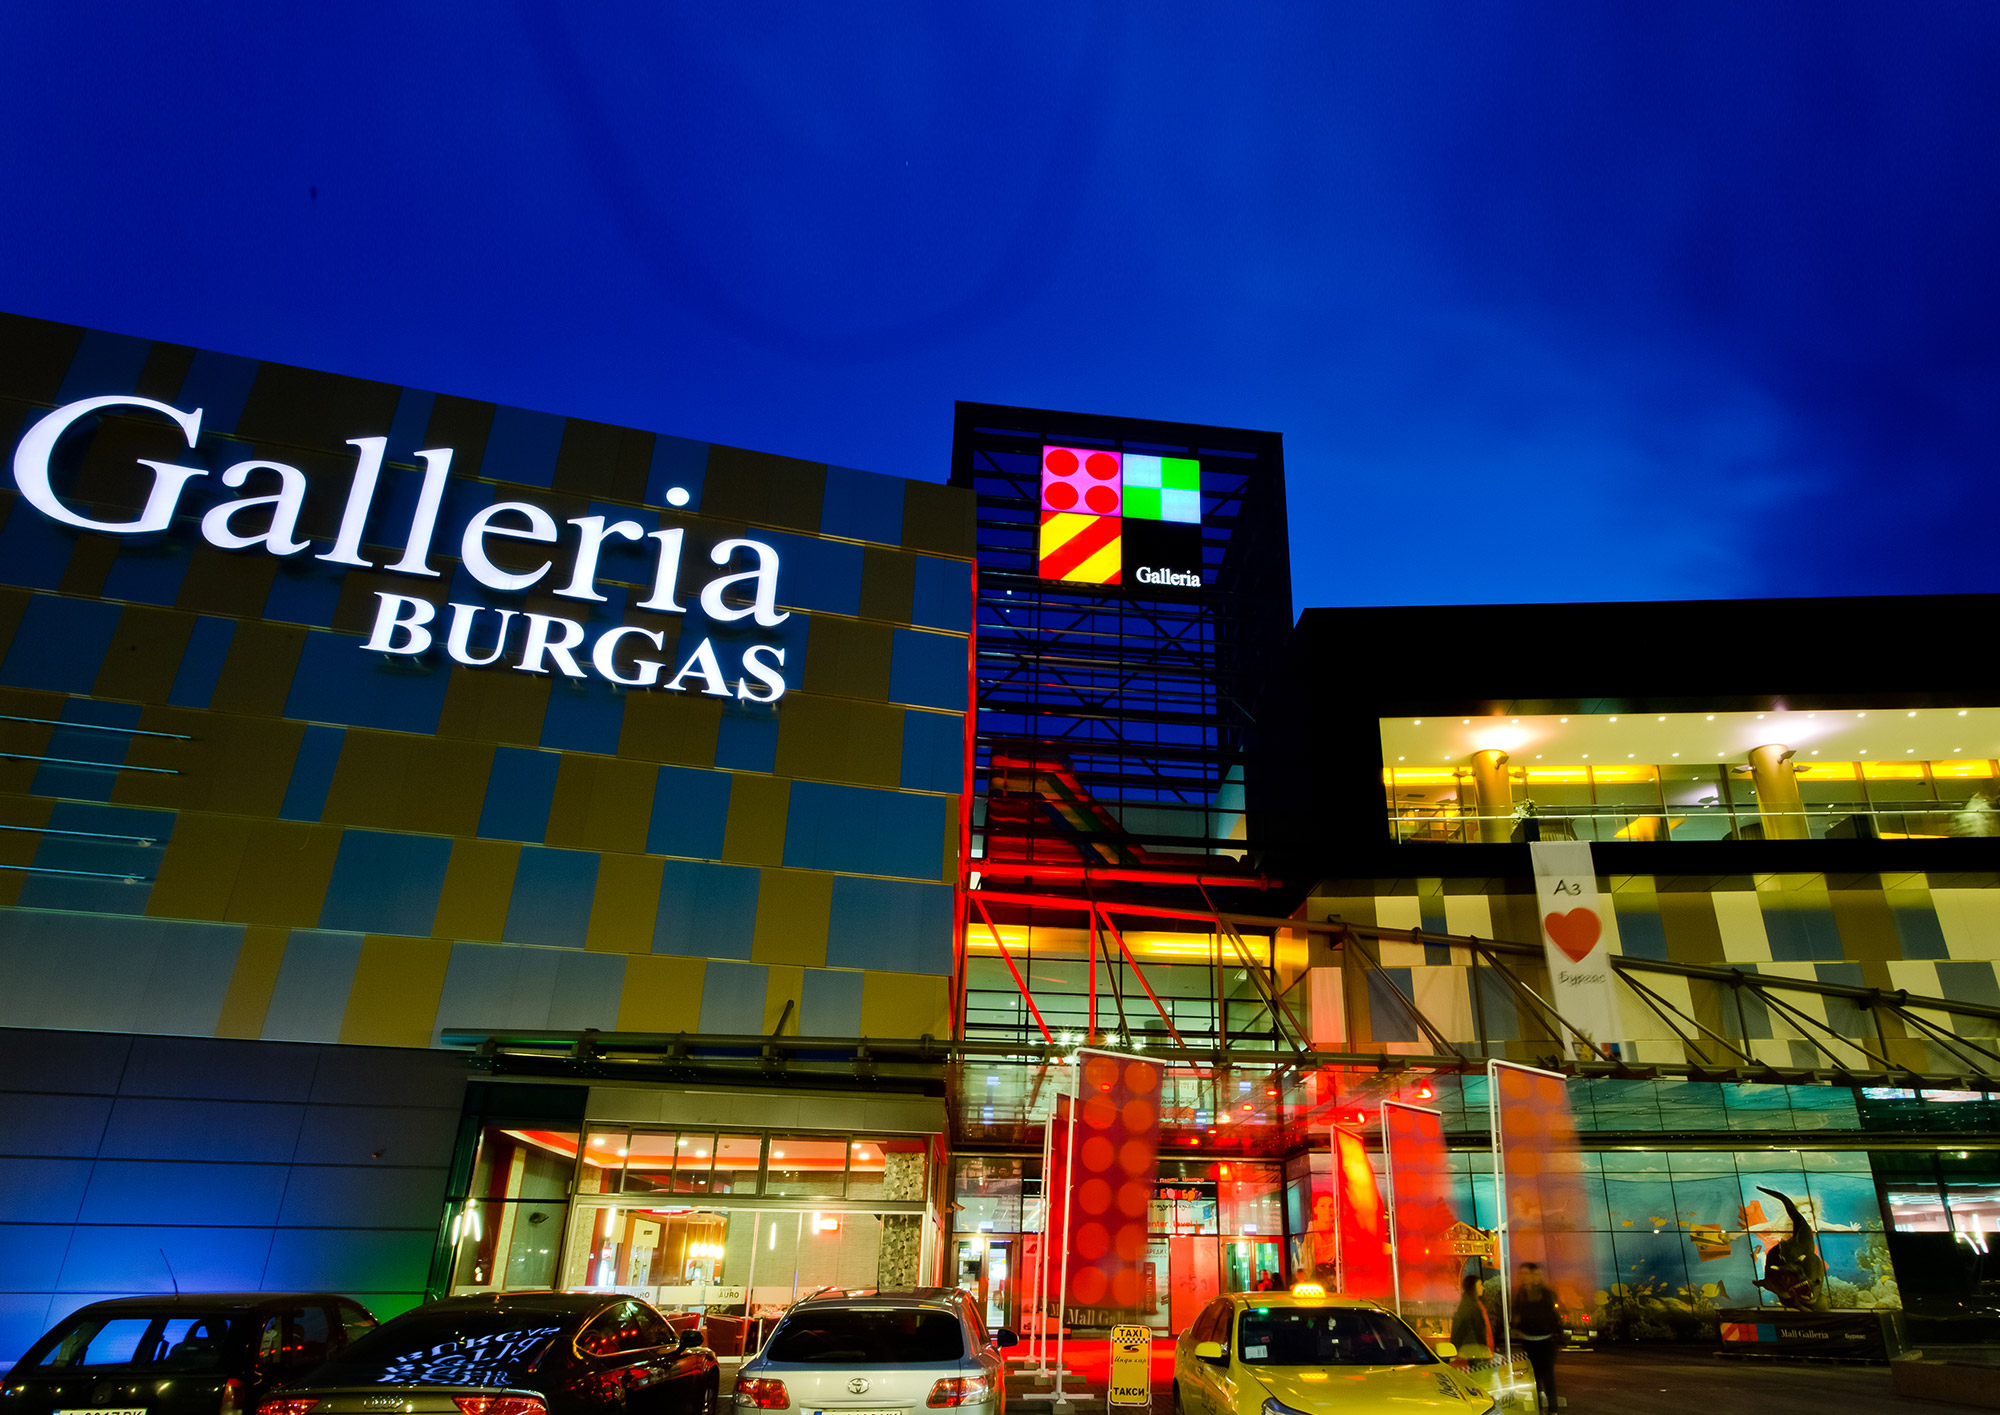 Mall Galleria Burgas